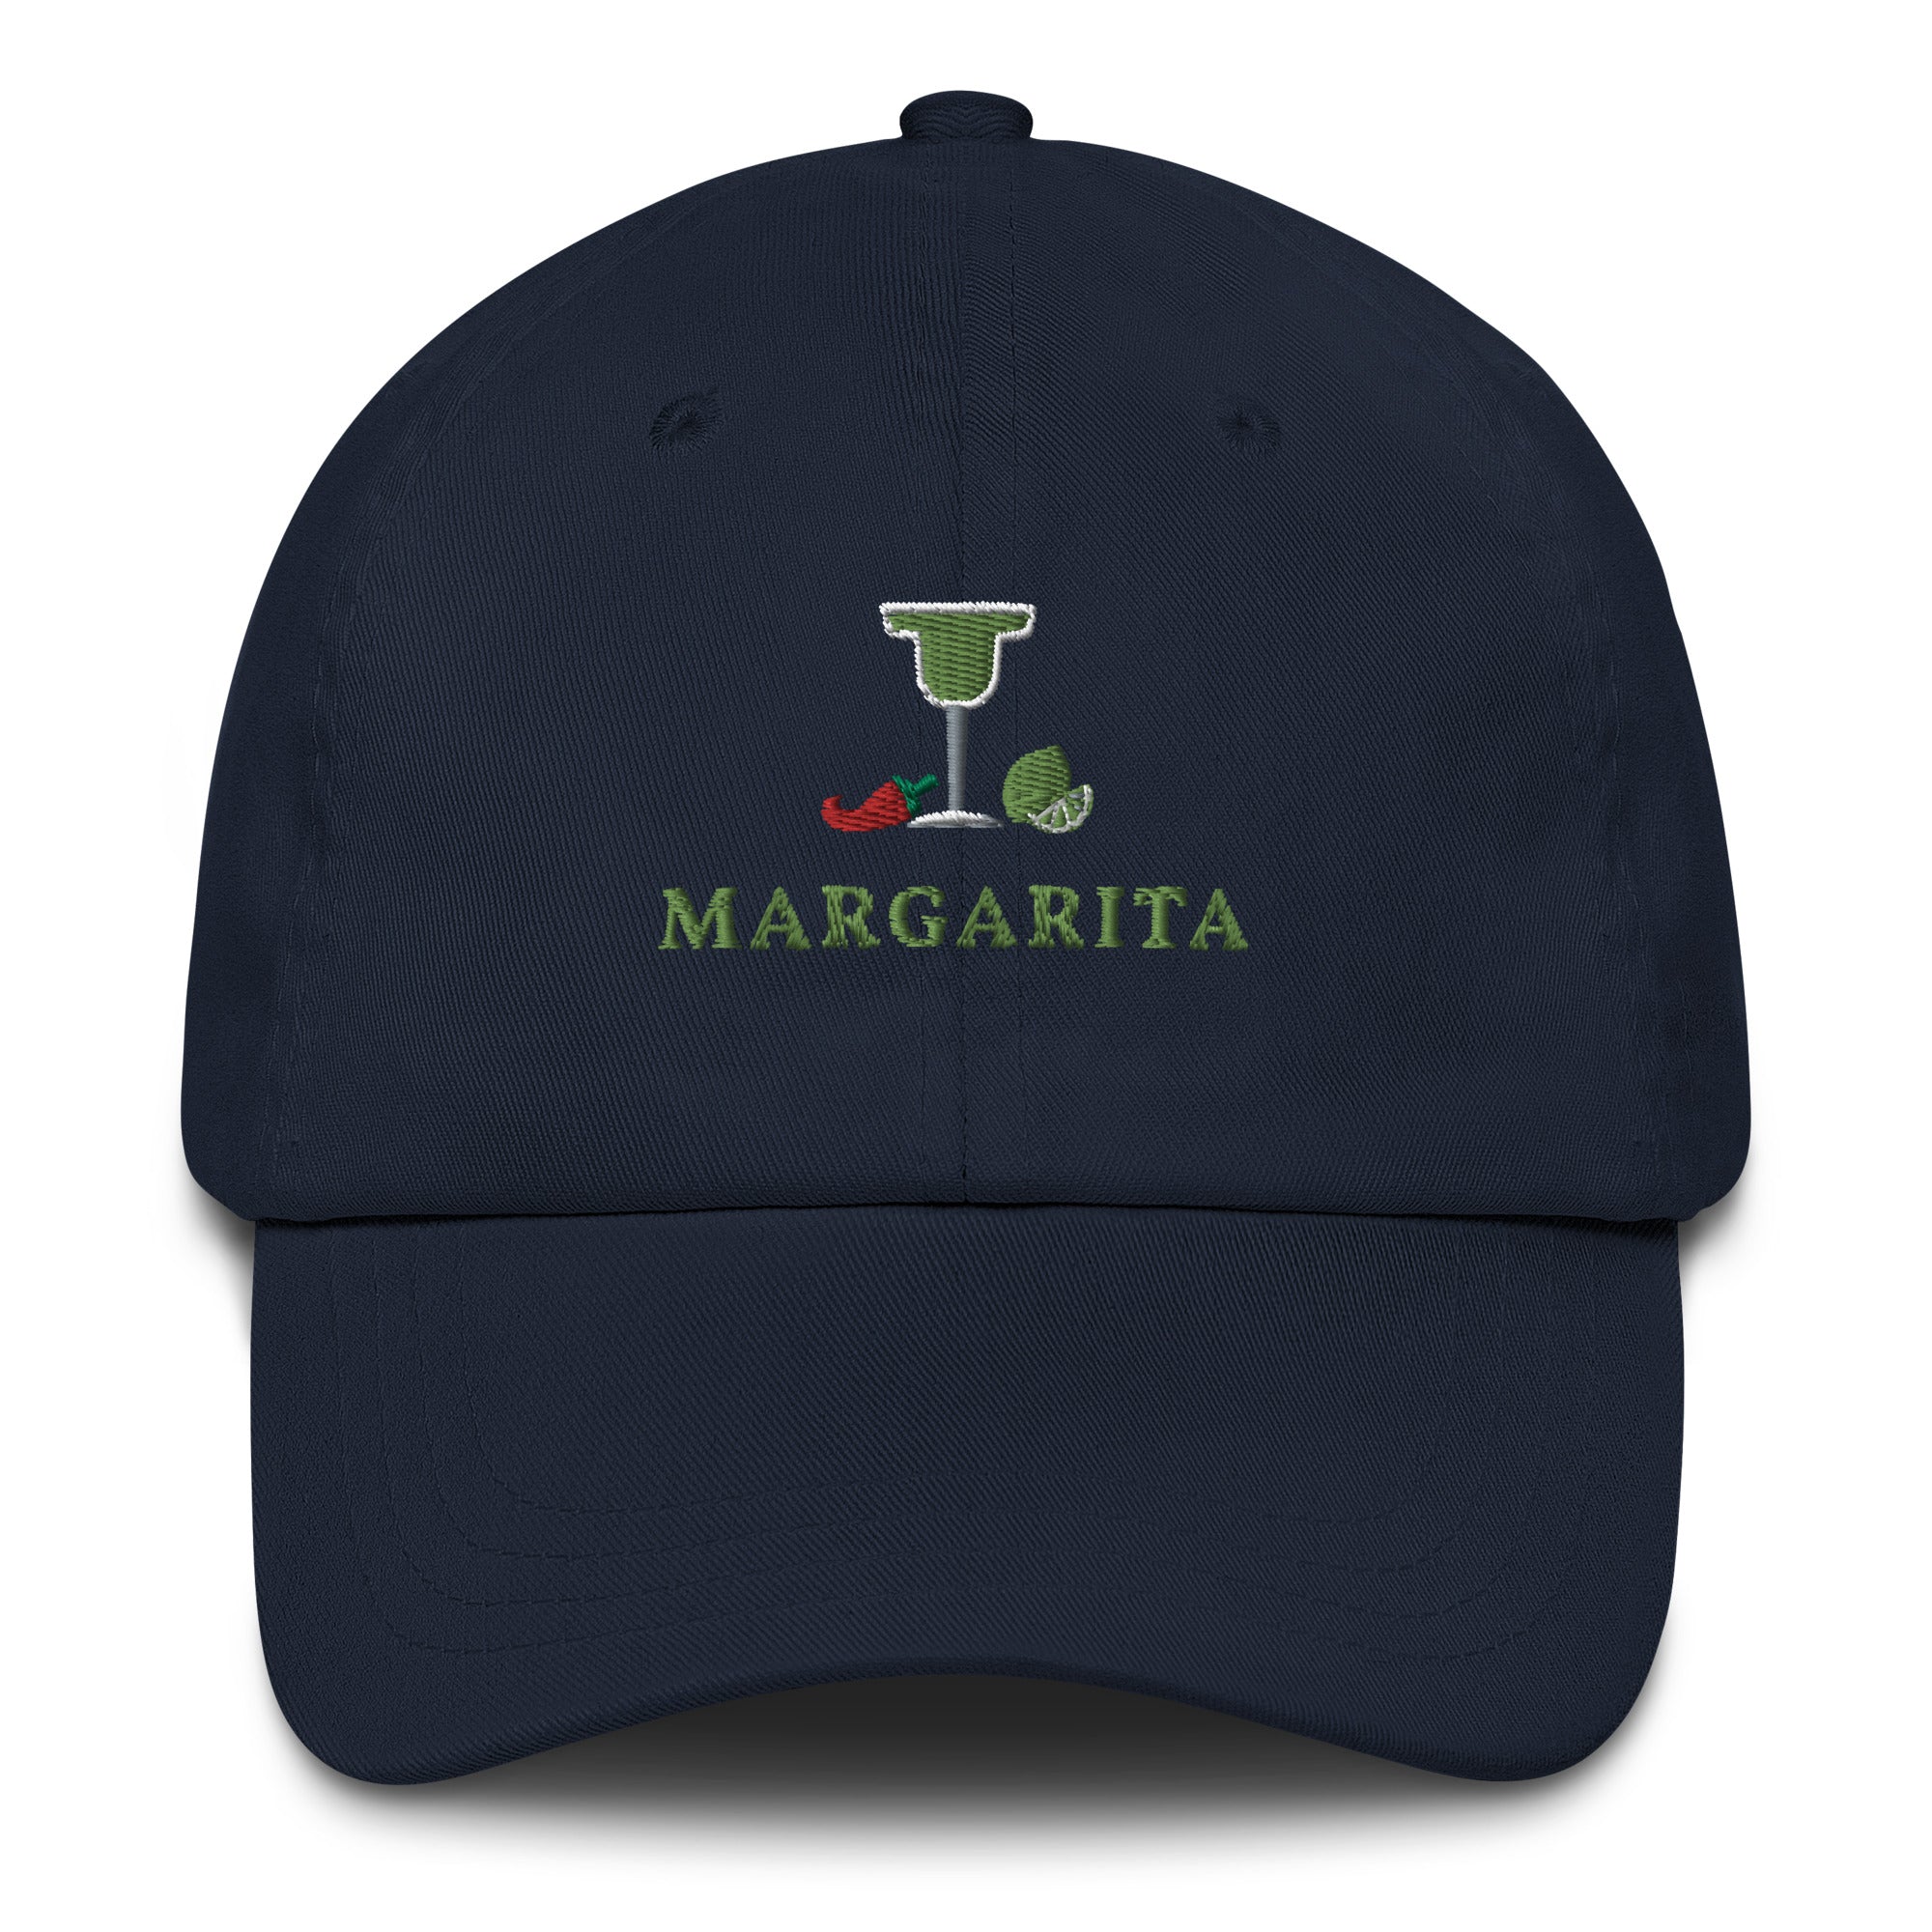 Margarita Glass - Cap